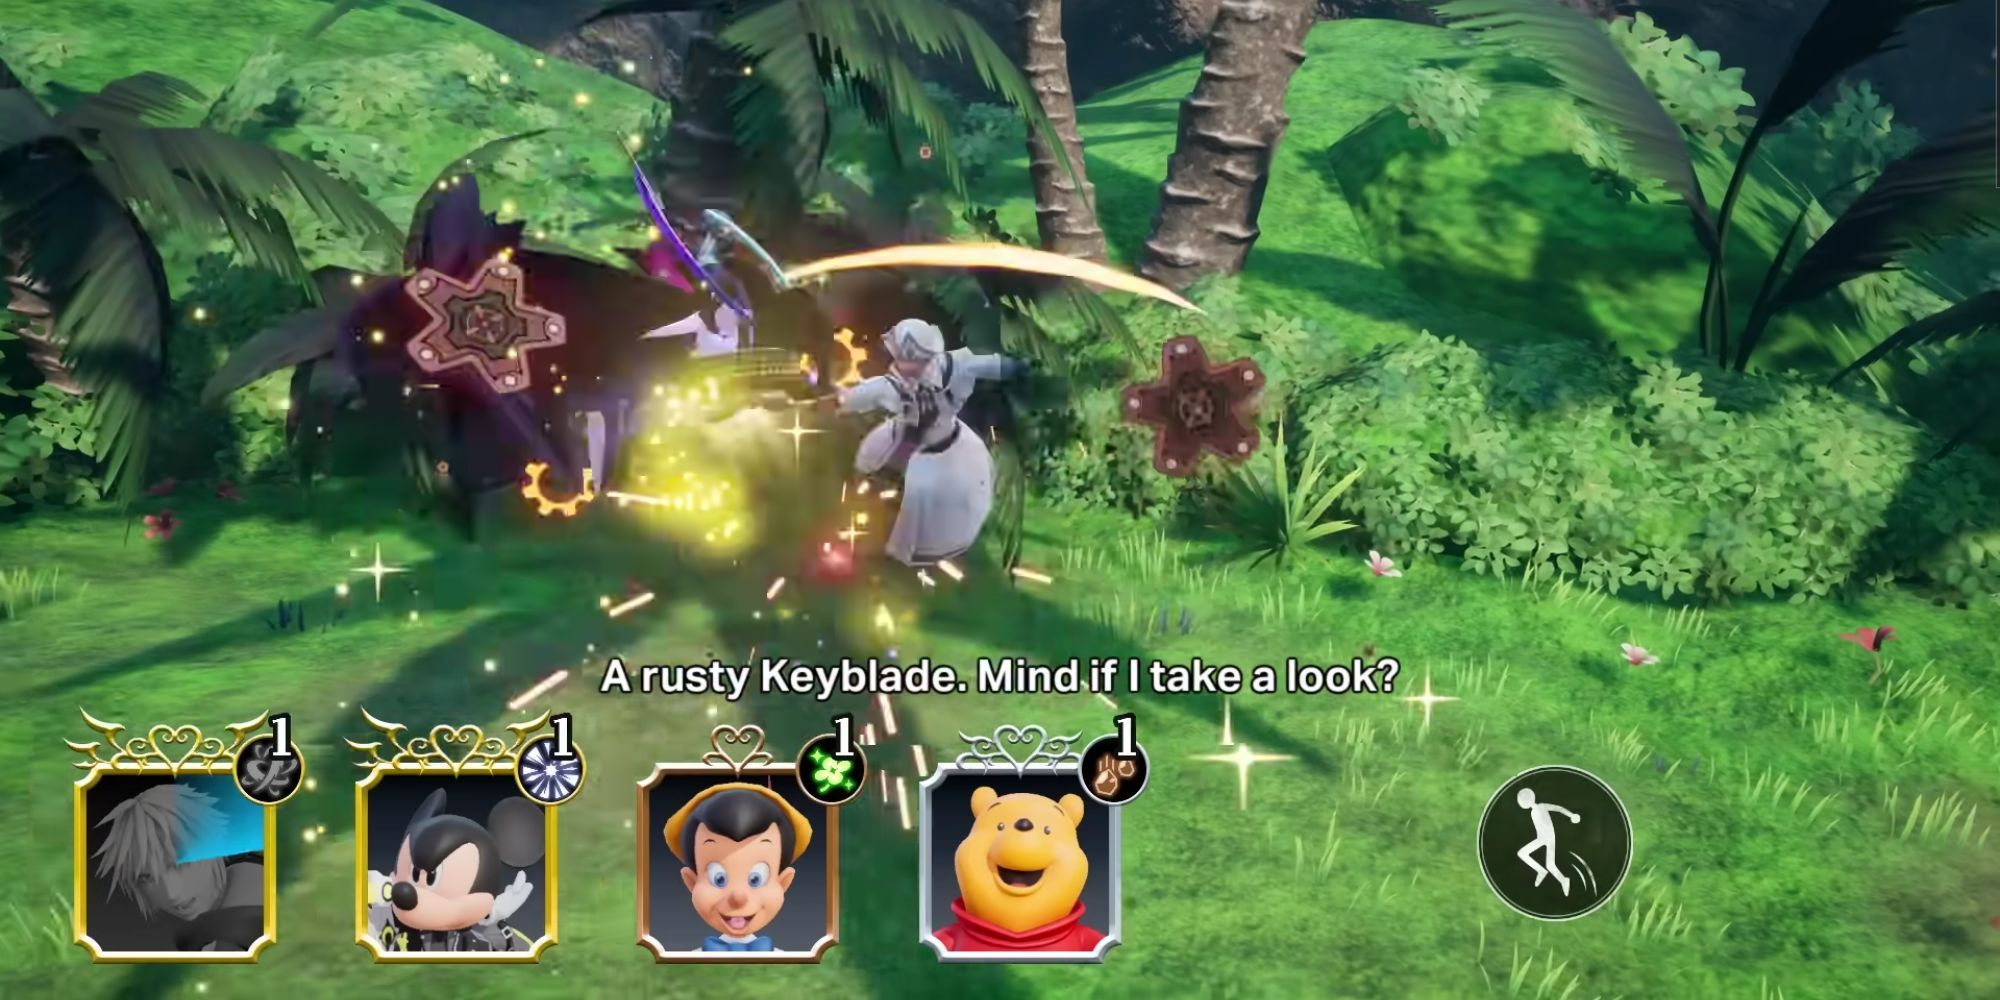 Kingdom Hearts Missing-Link is like Pokémon Go for Disney fans